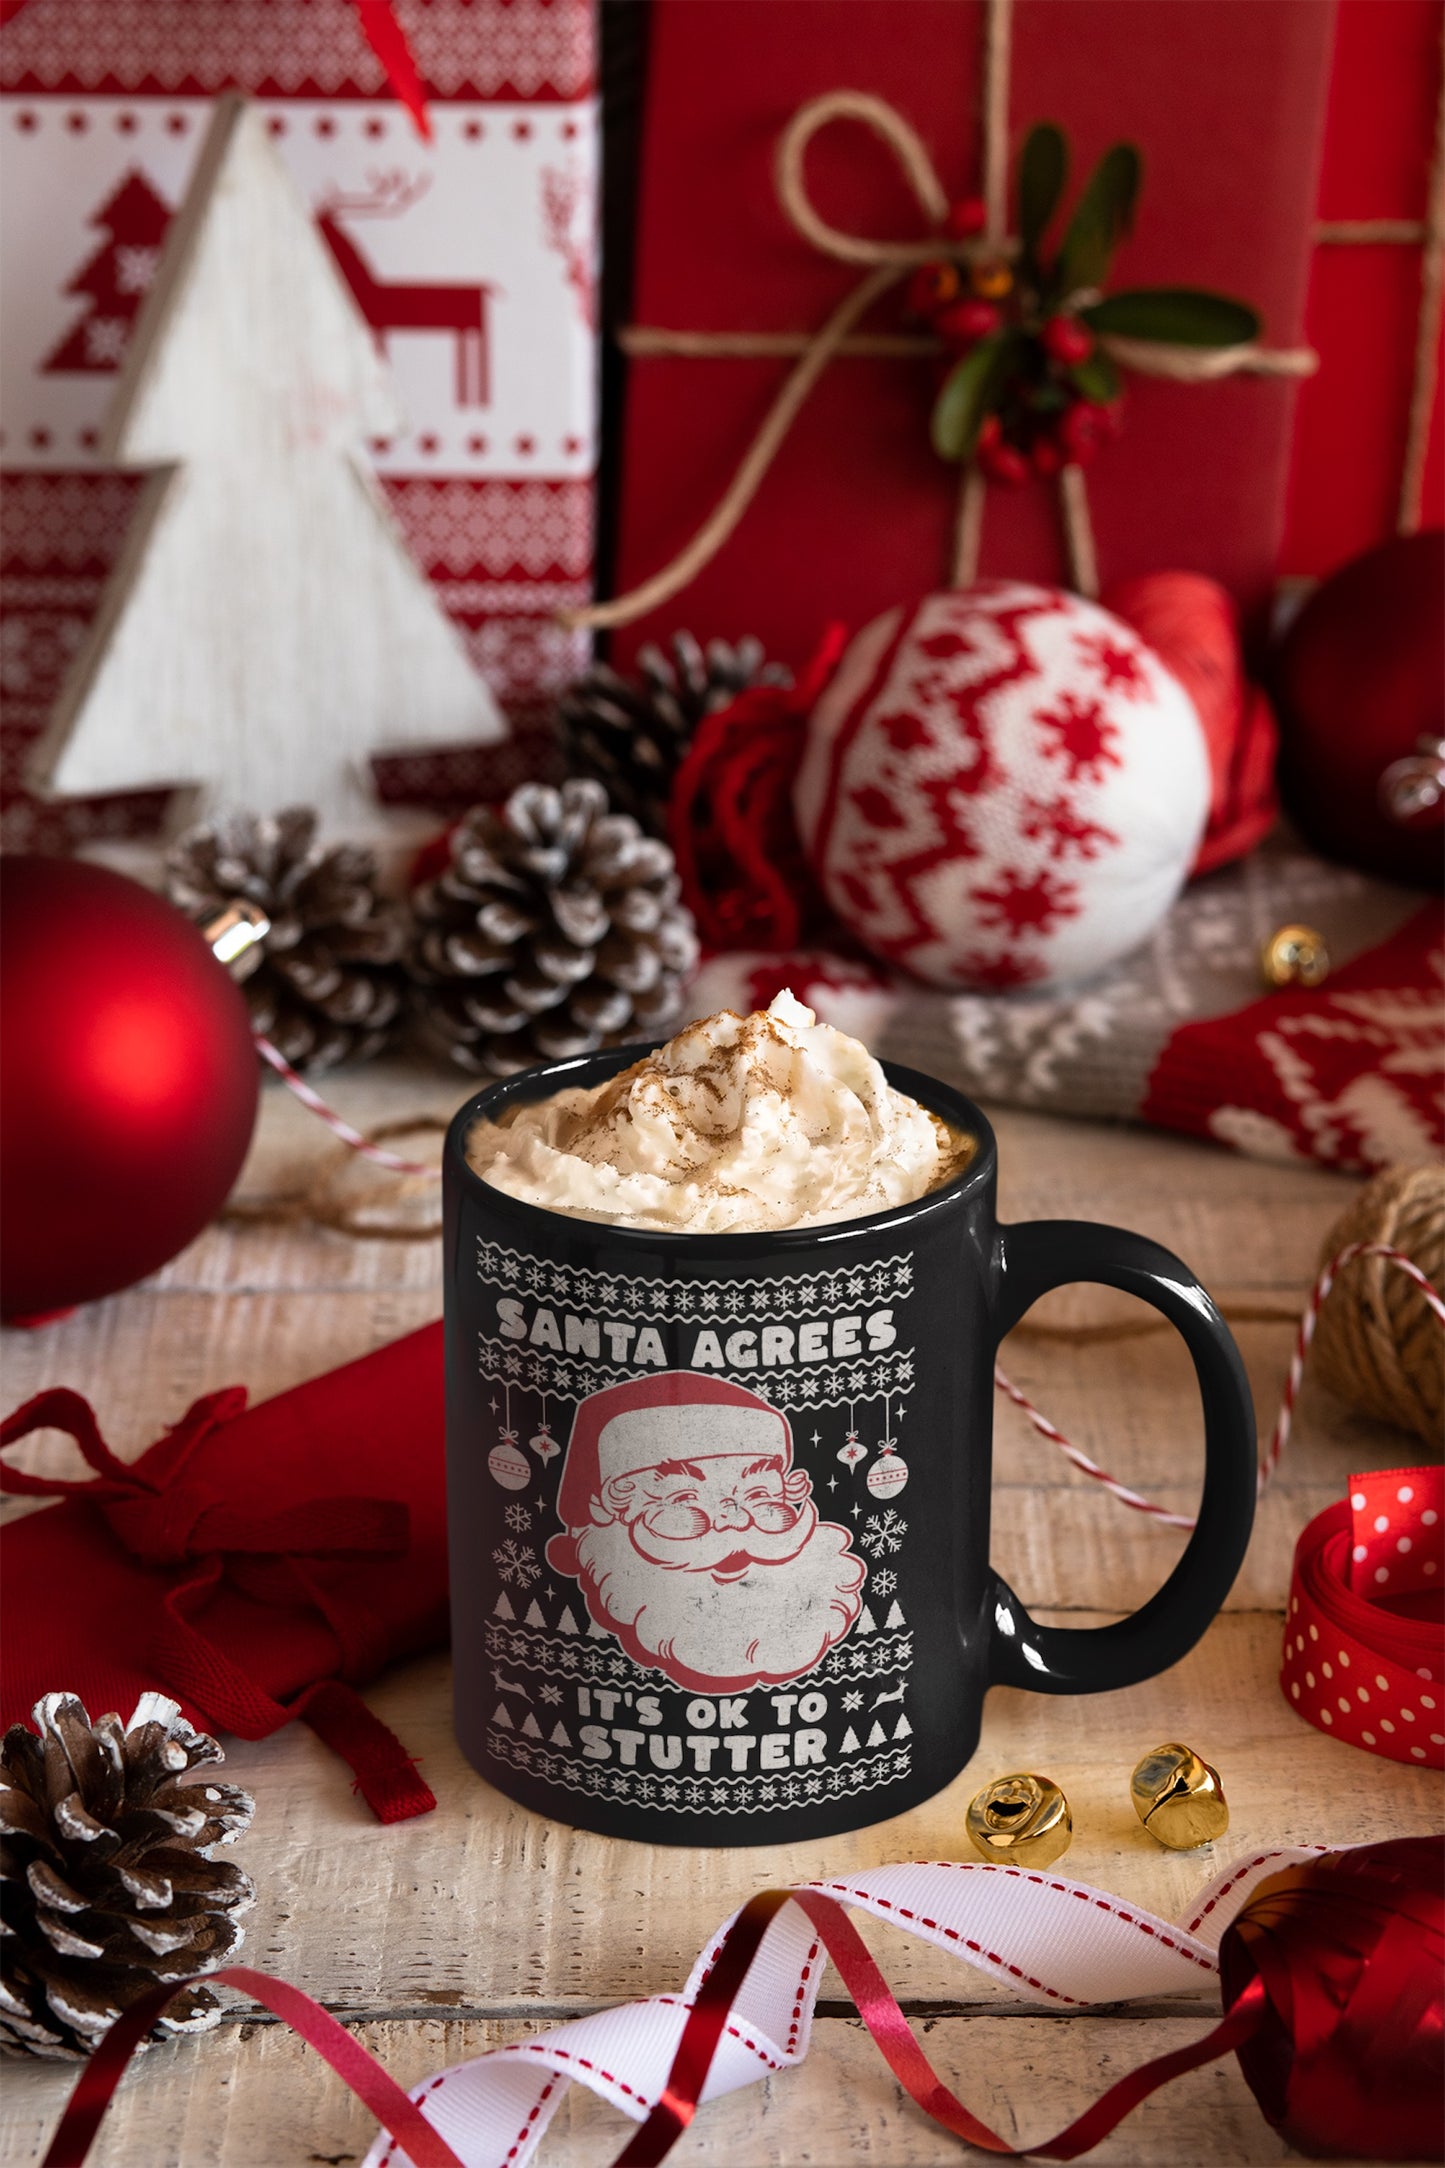 Santa Agrees It's OK to Stutter Christmas Coffee Mug